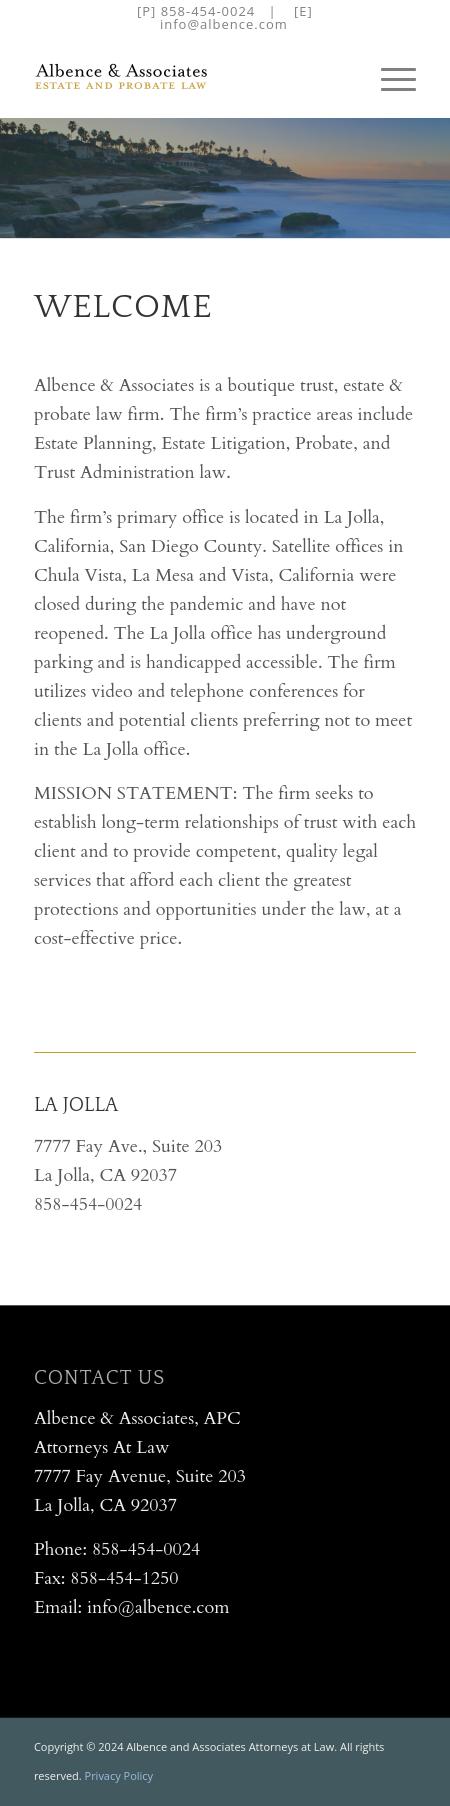 Albence & Associates - La Jolla CA Lawyers